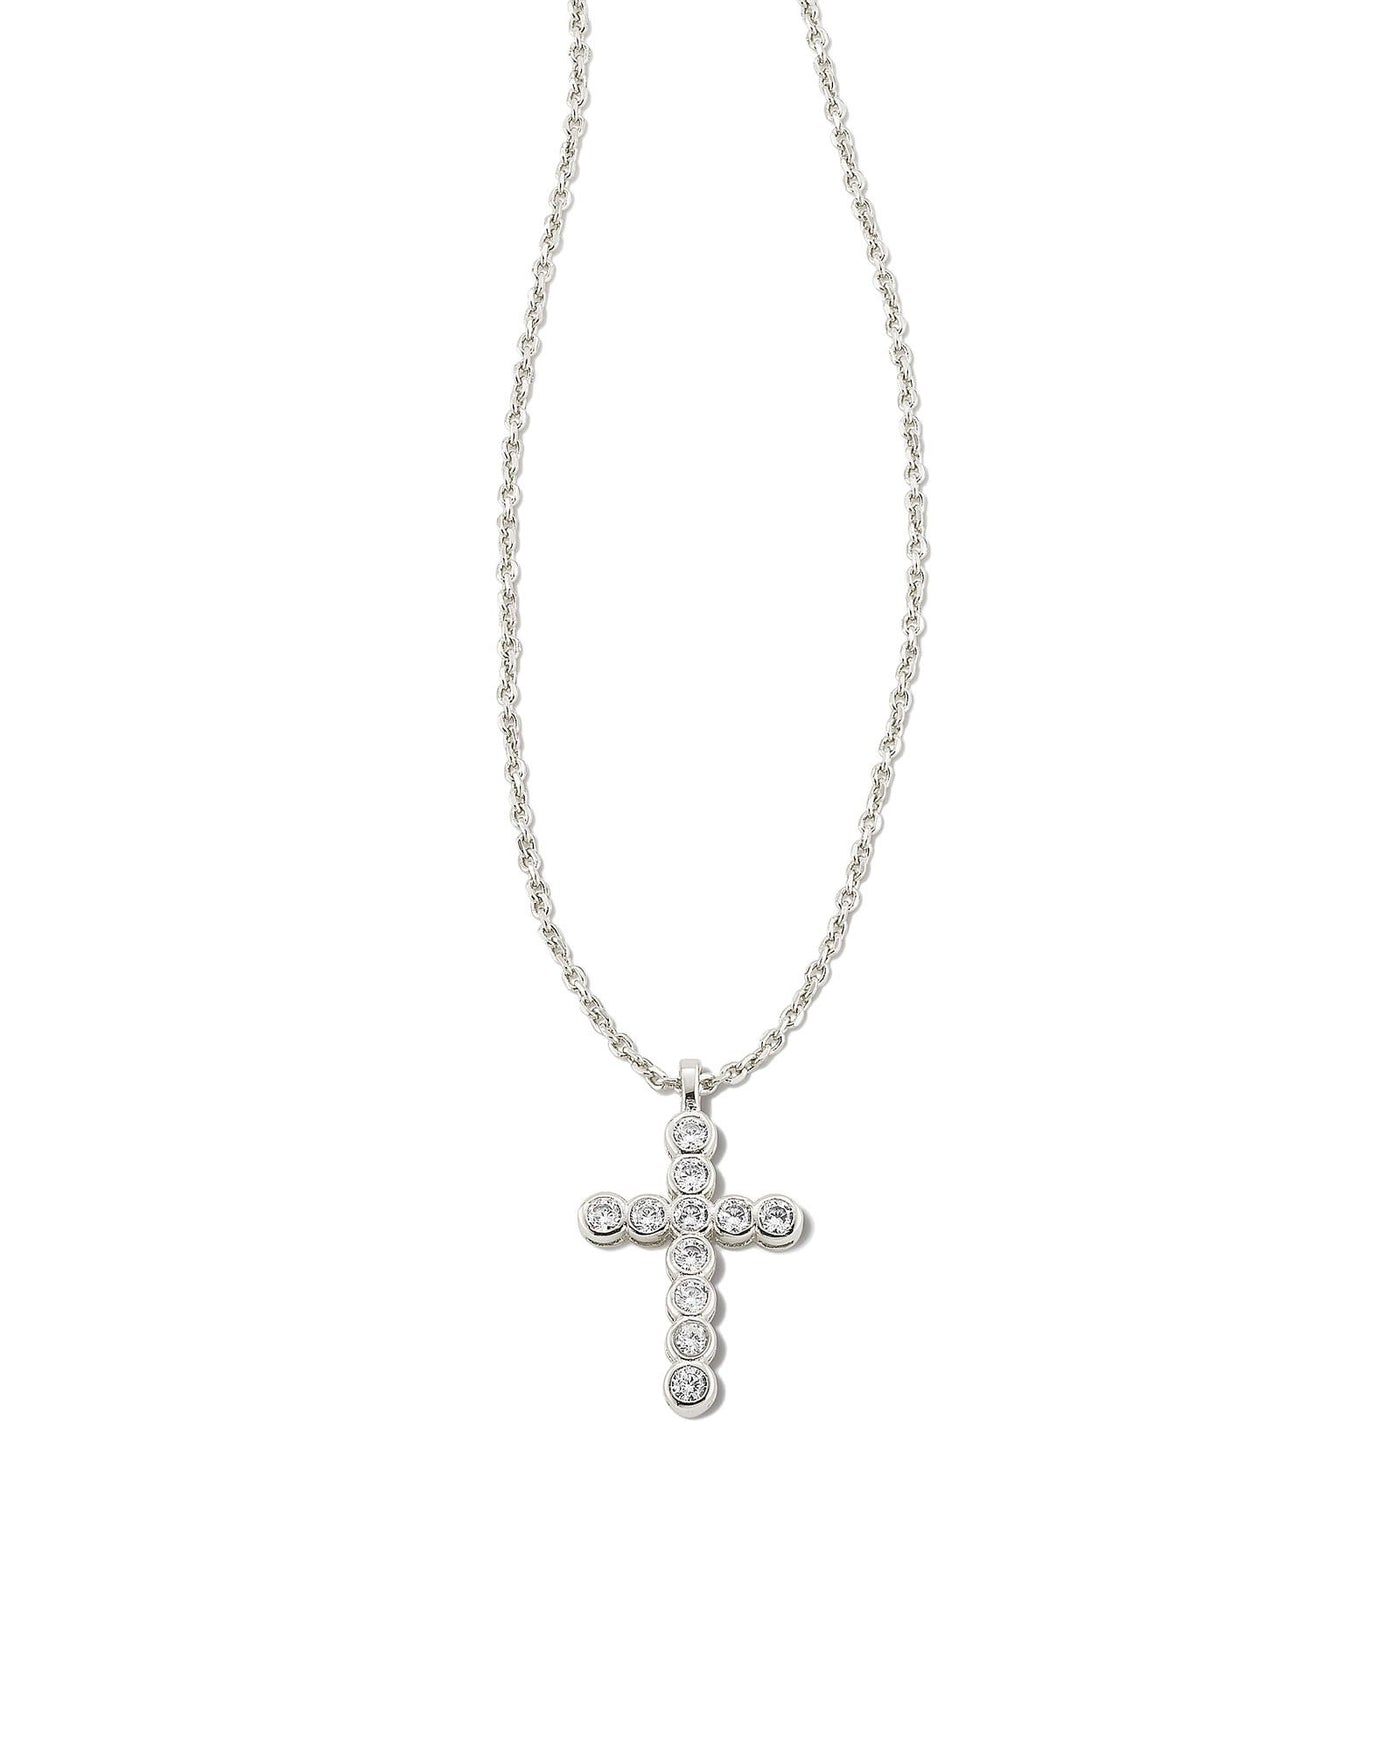 Kendra Scott Crystal Cross Pendant Necklace Silver closeup.